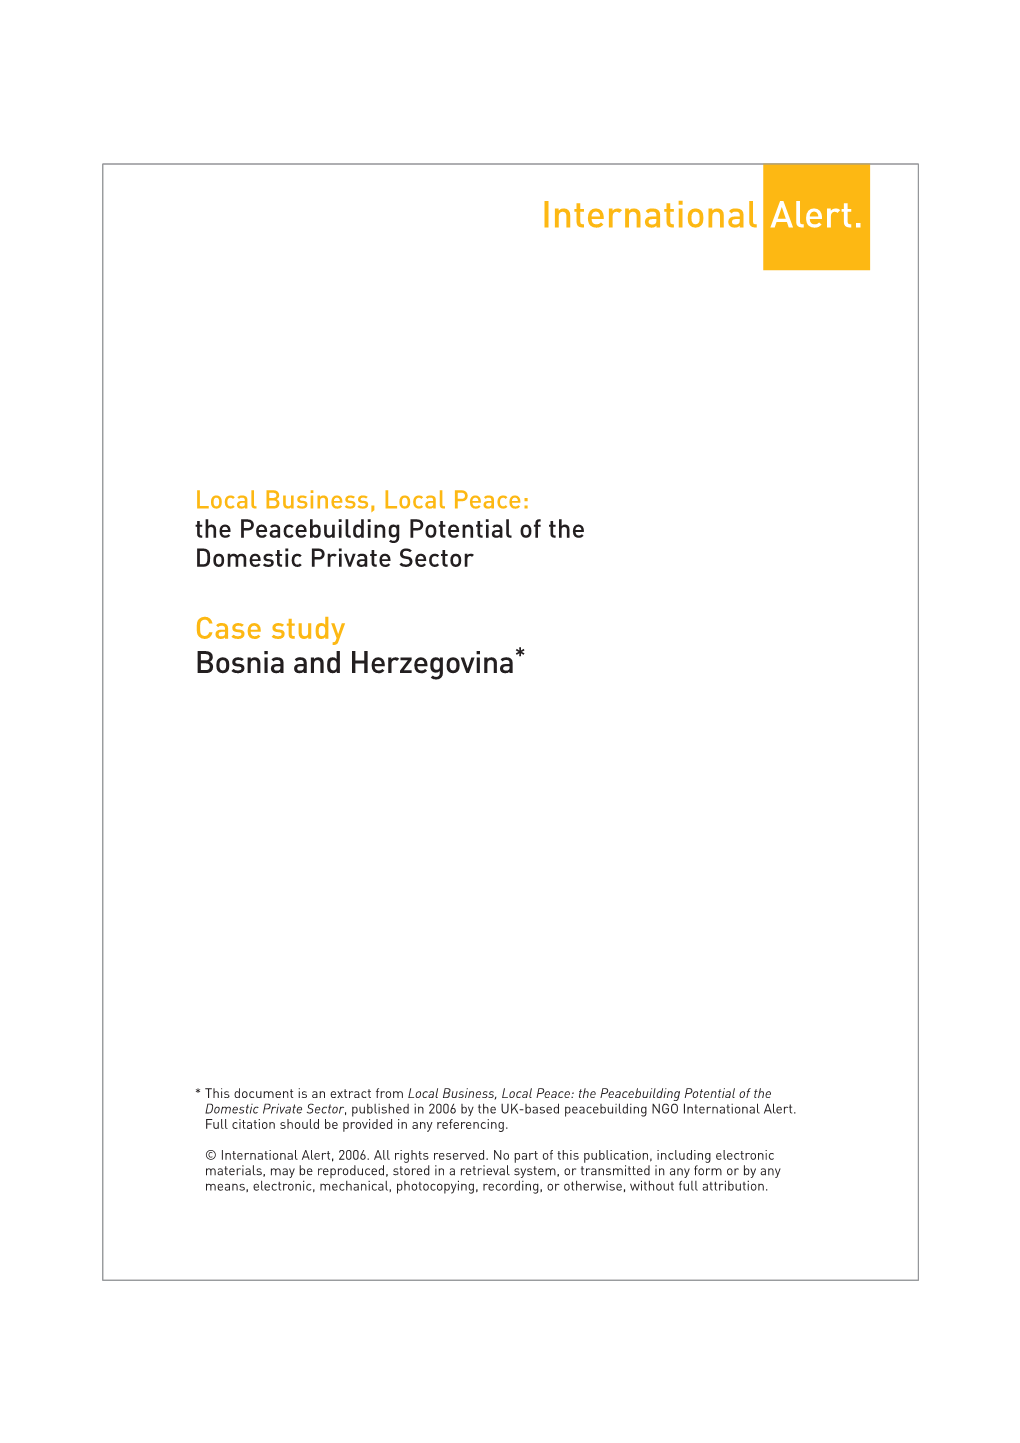 Bosnia and Herzogovina Case Study